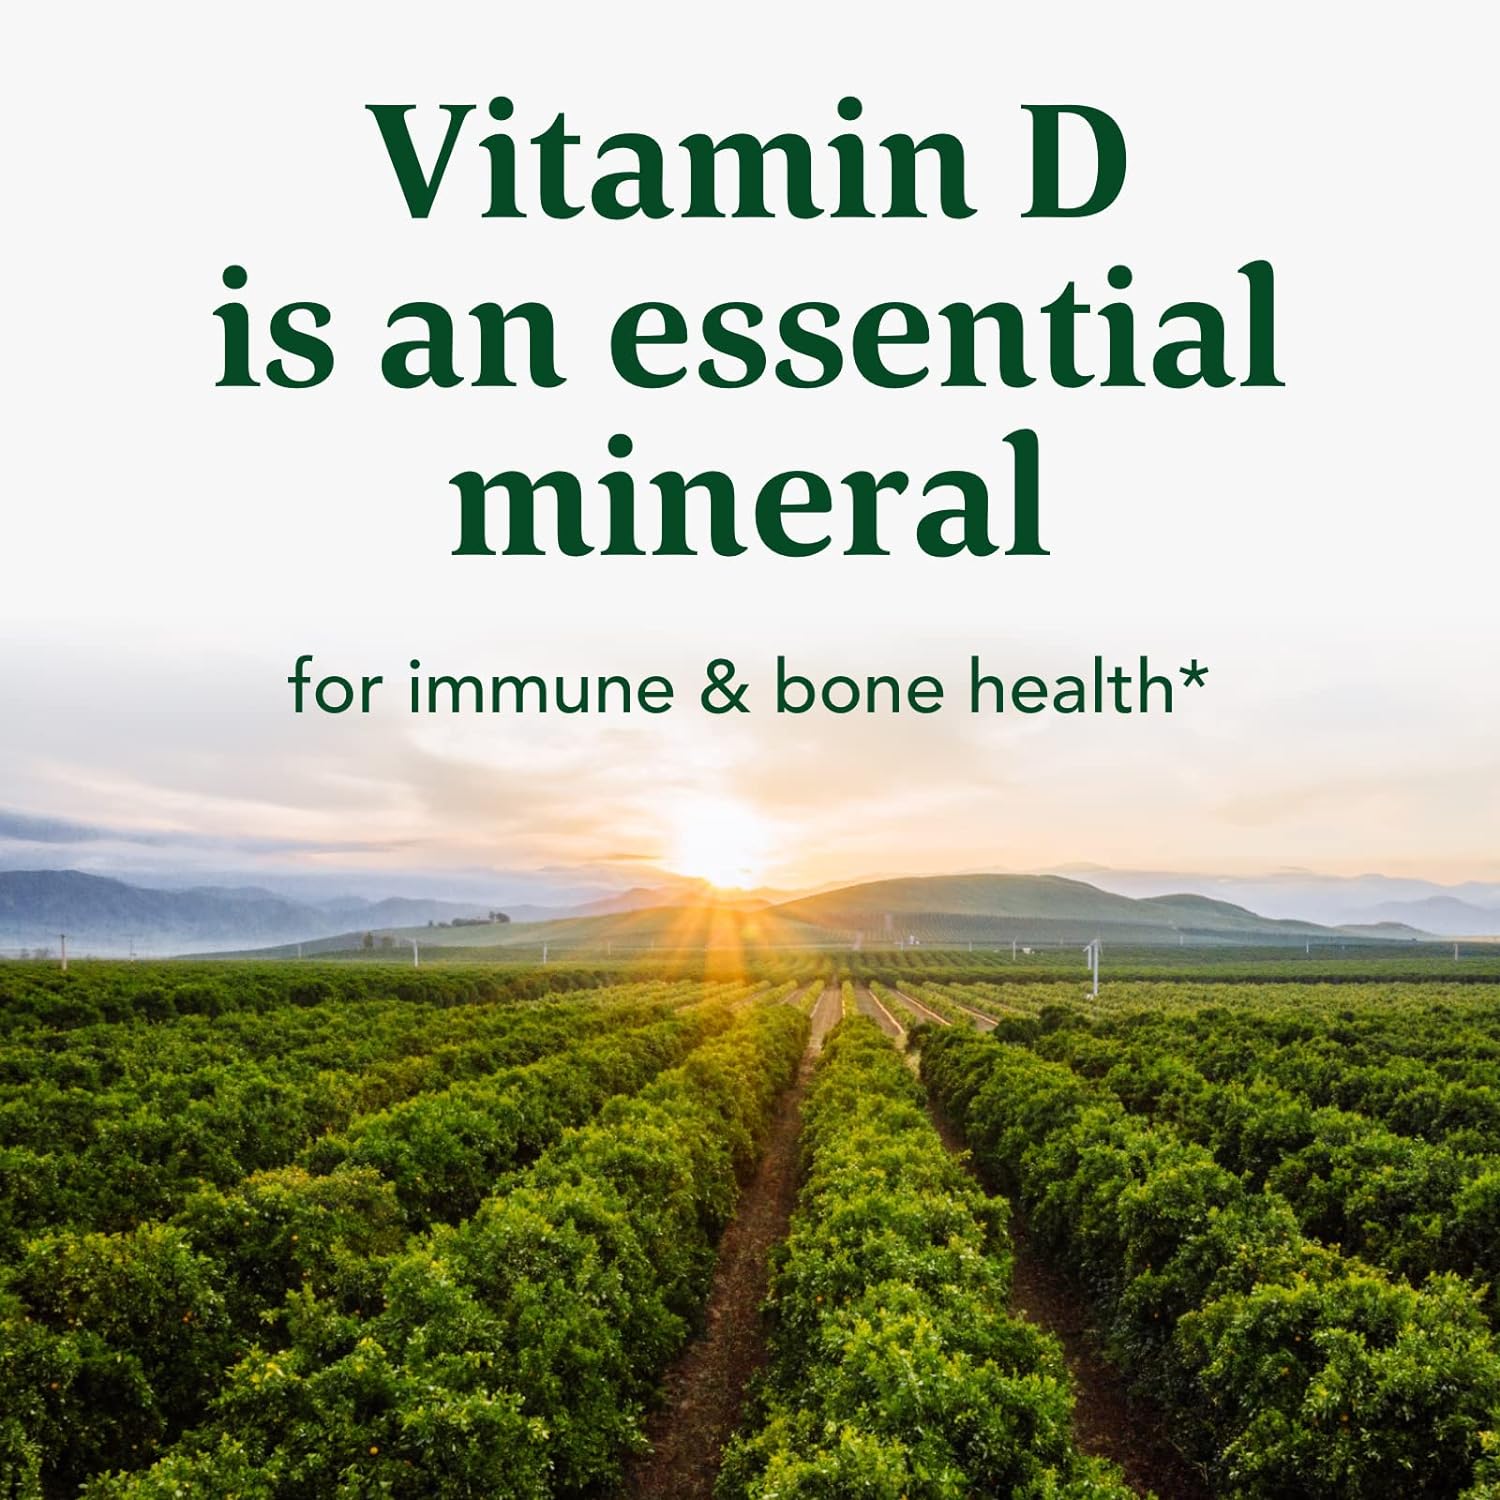 MegaFood Vitamin D3 5000 IU (125 mcg) - Vegetarian Vitamin D Supplements with Vitamin D3 K2, Supports Bones, Teeth, Muscles & Immune Health, Certified Non-GMO - 120 Mini Capsules, 120 Servings : Health & Household